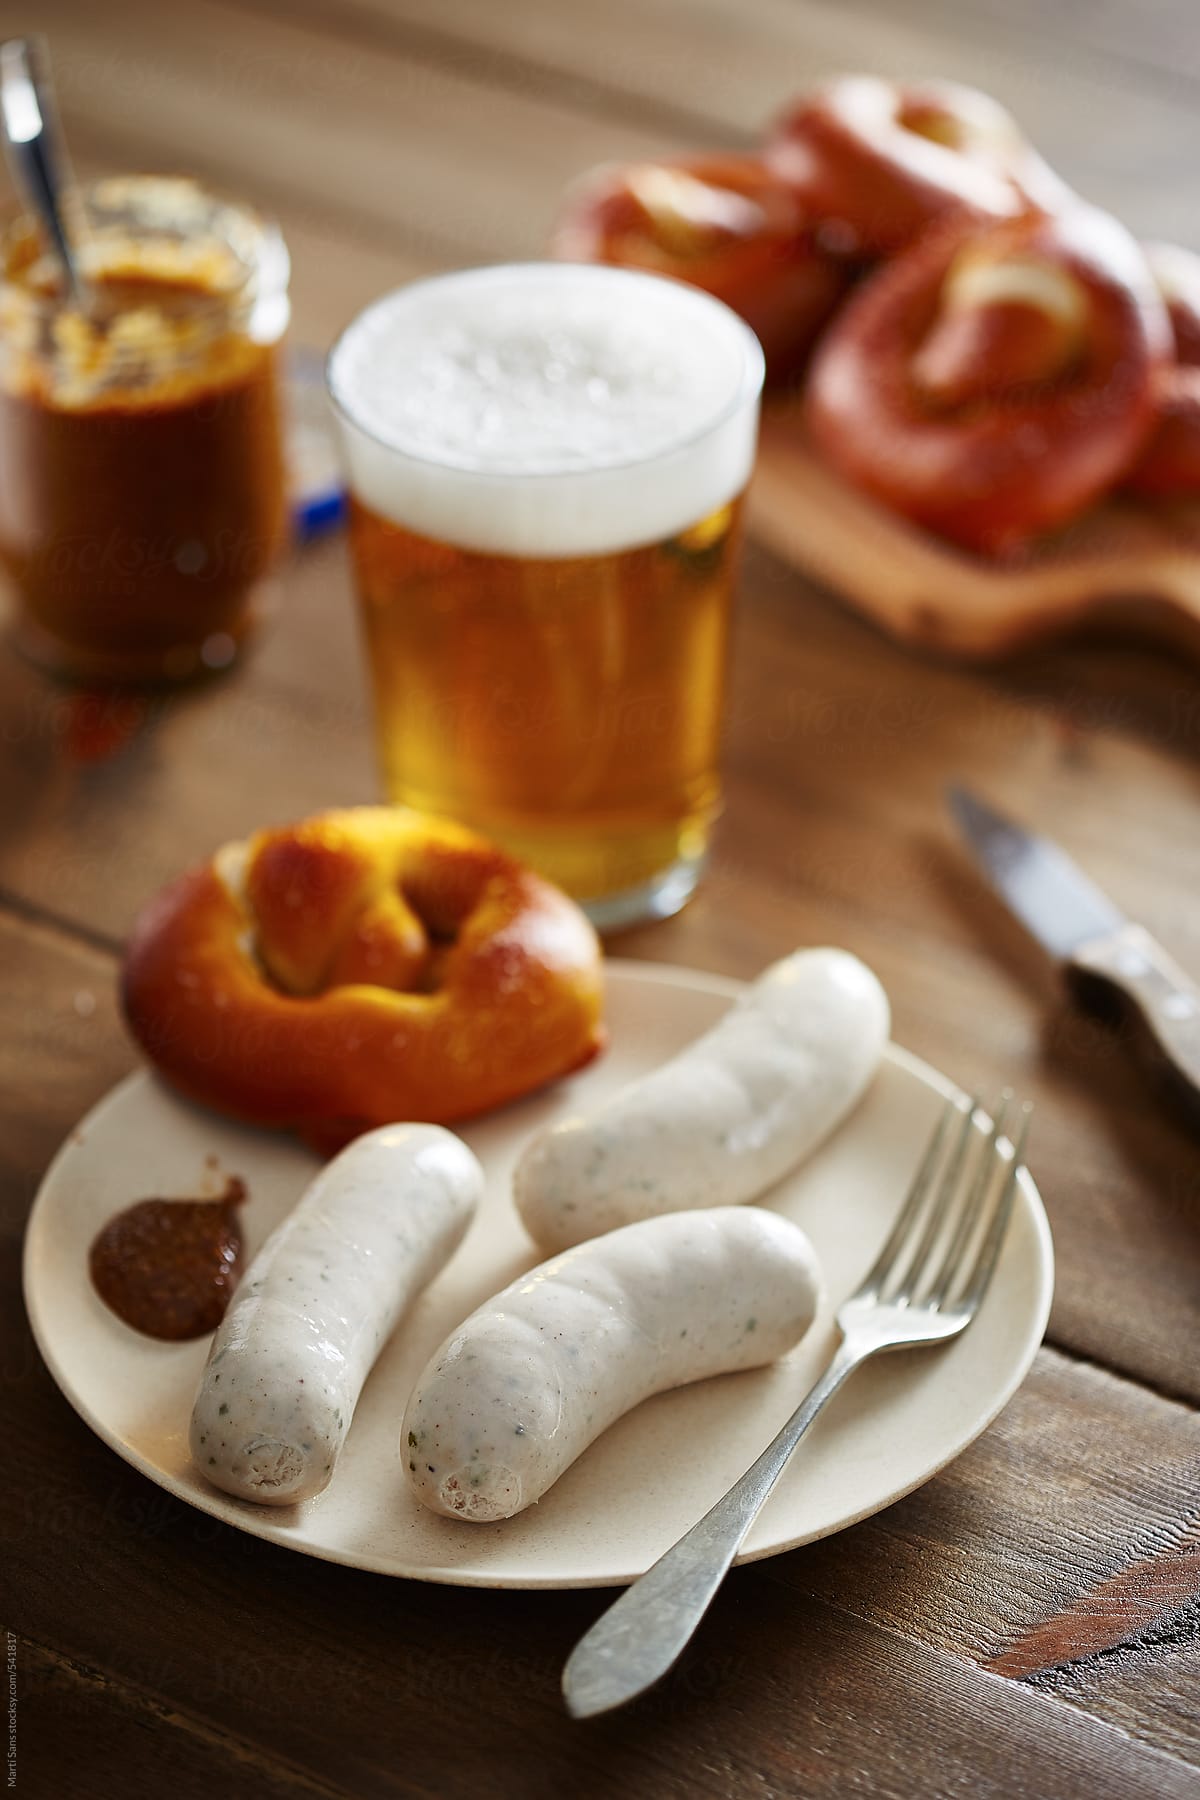 Weissburst with pretzels, mustard and beer